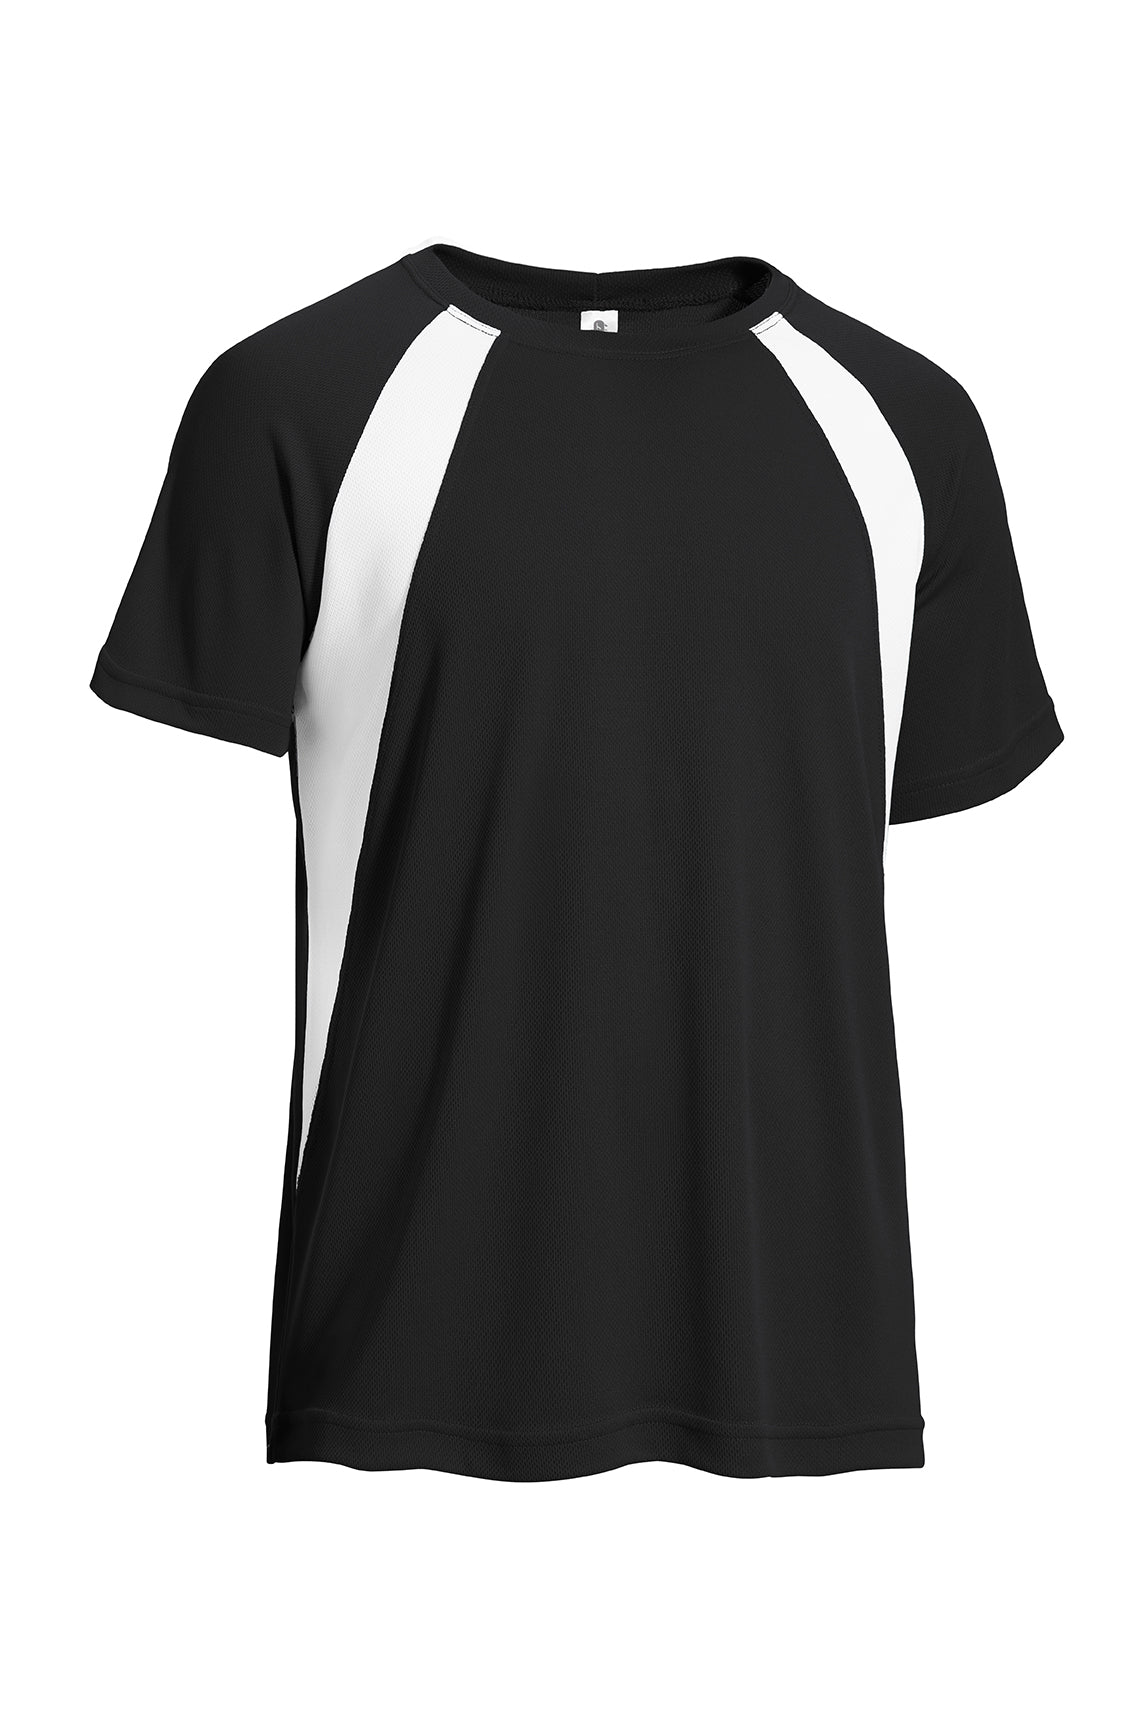 Expert Brand Wholesale Made in USA Blanks Men's T-Shirt Oxymesh Raglan Colorblock Tee in black#black